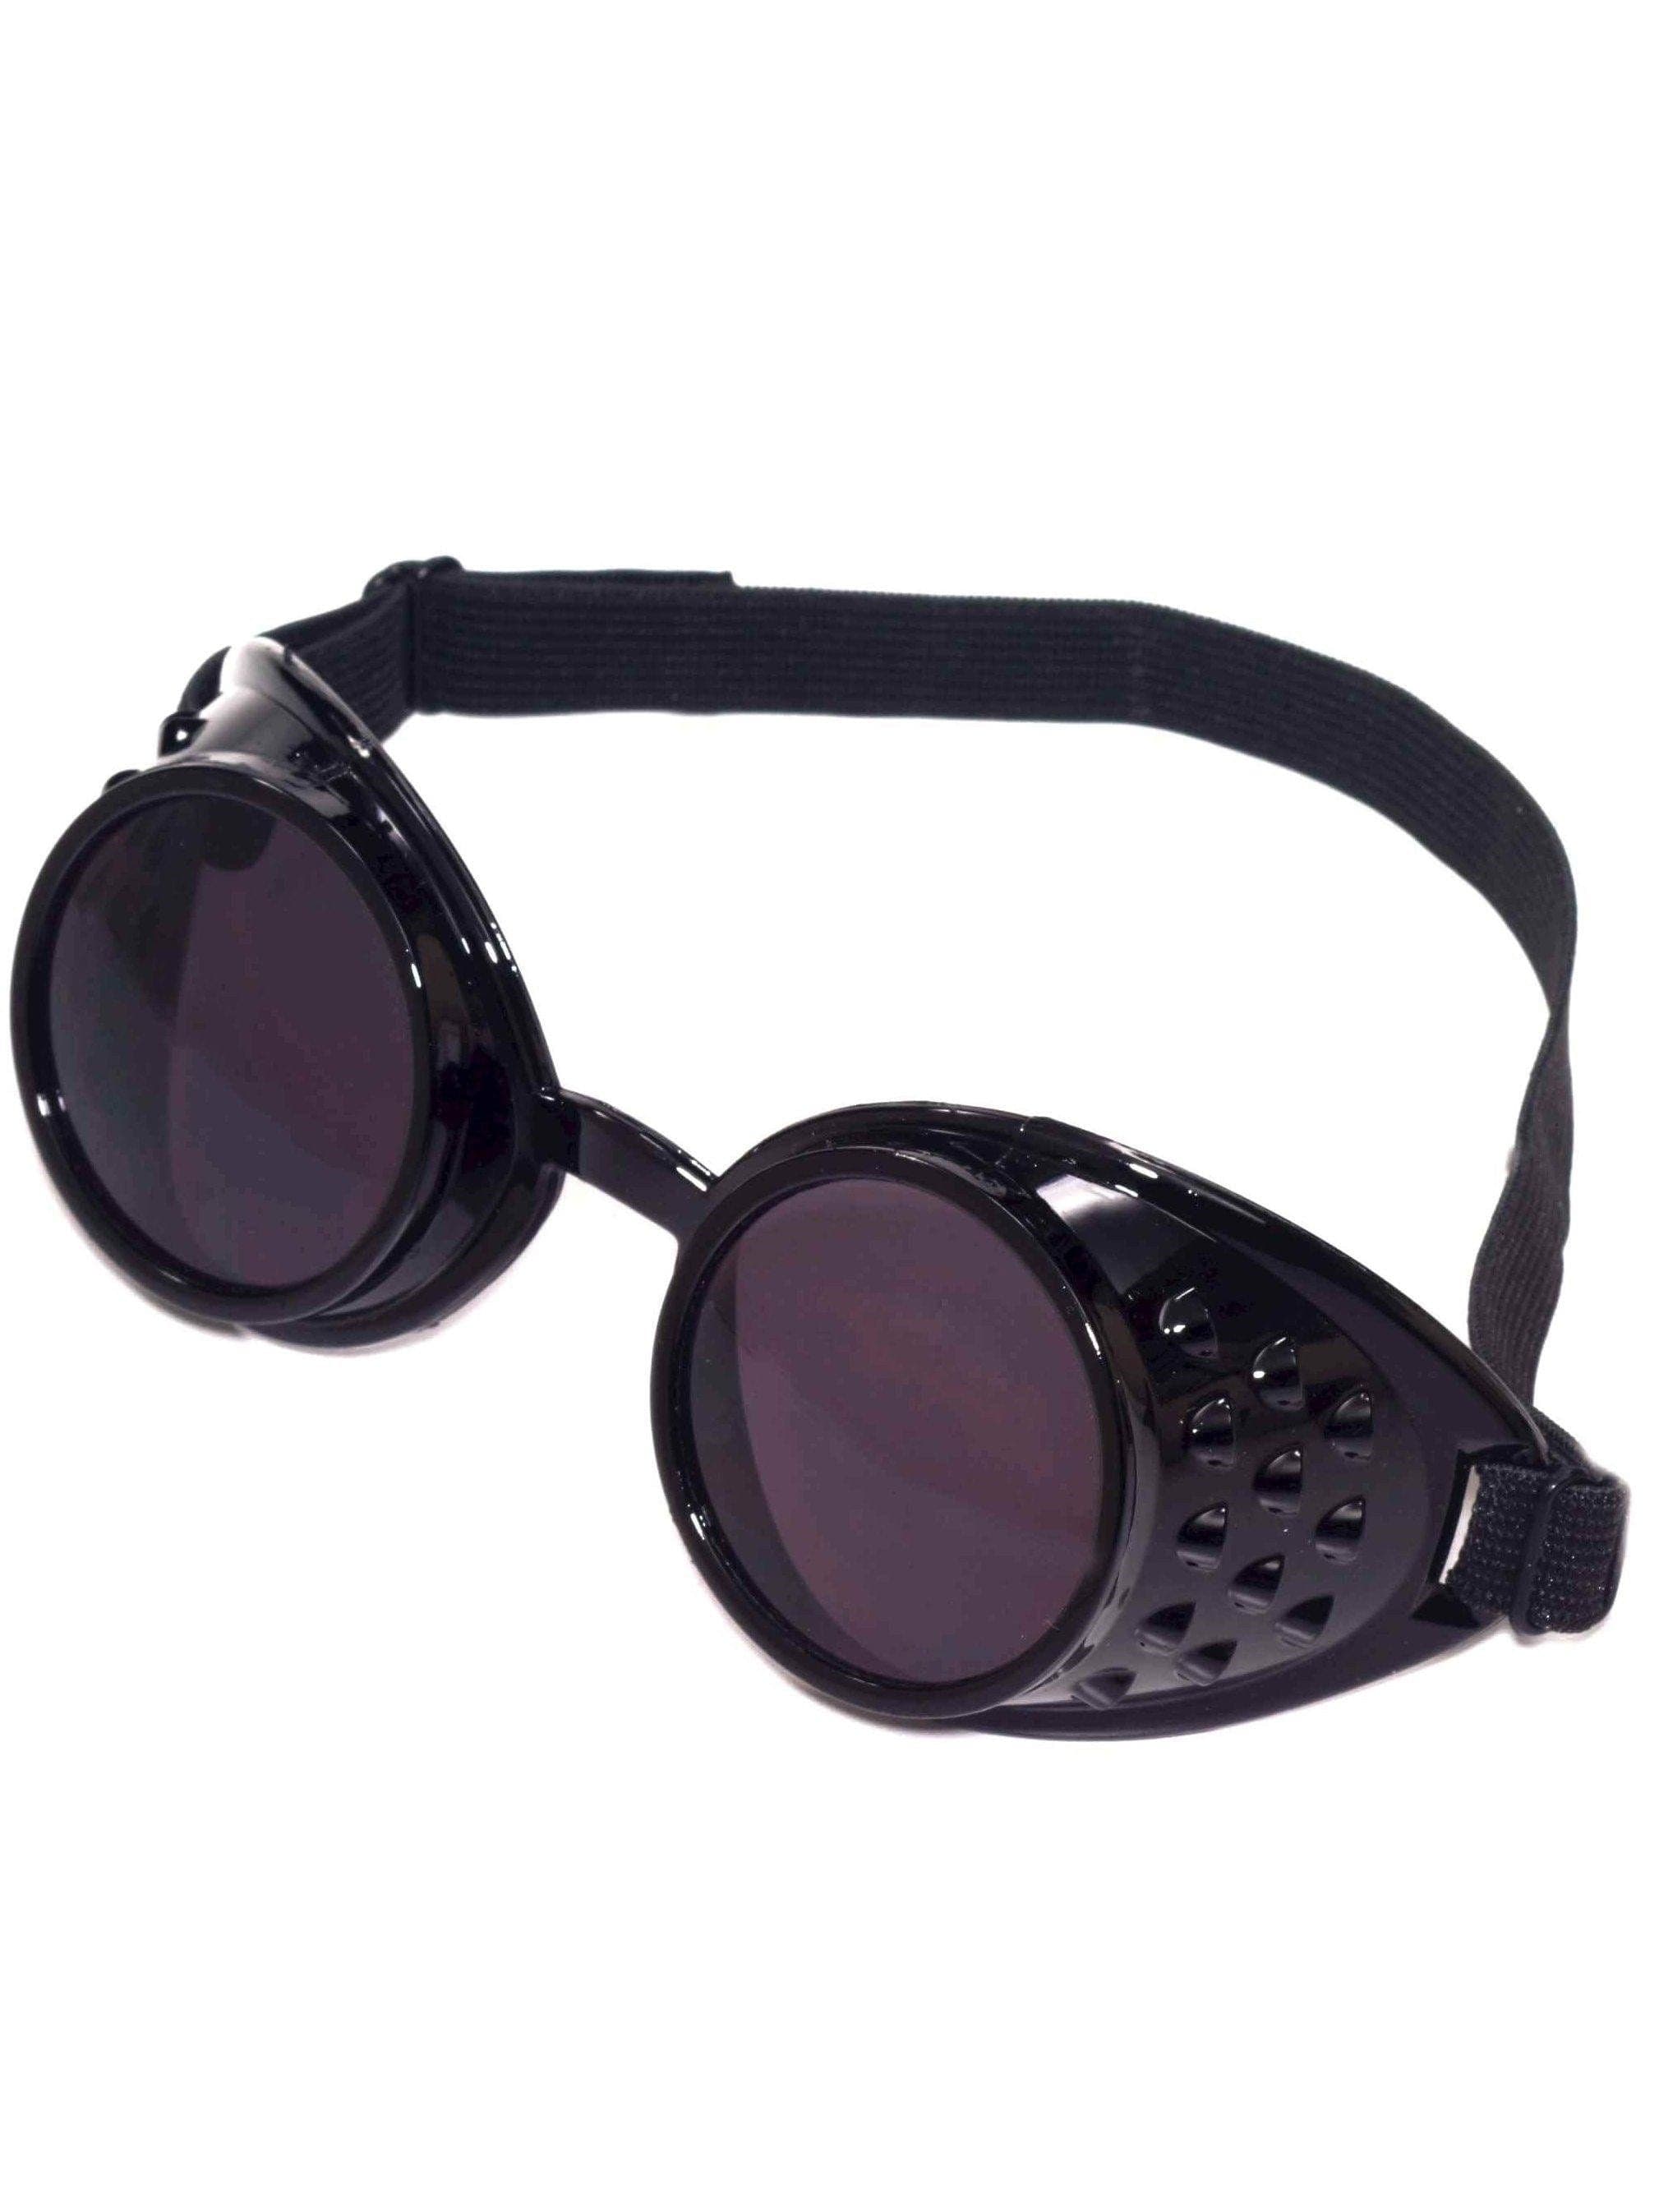 Adult Black Steampunk Goggles - costumes.com